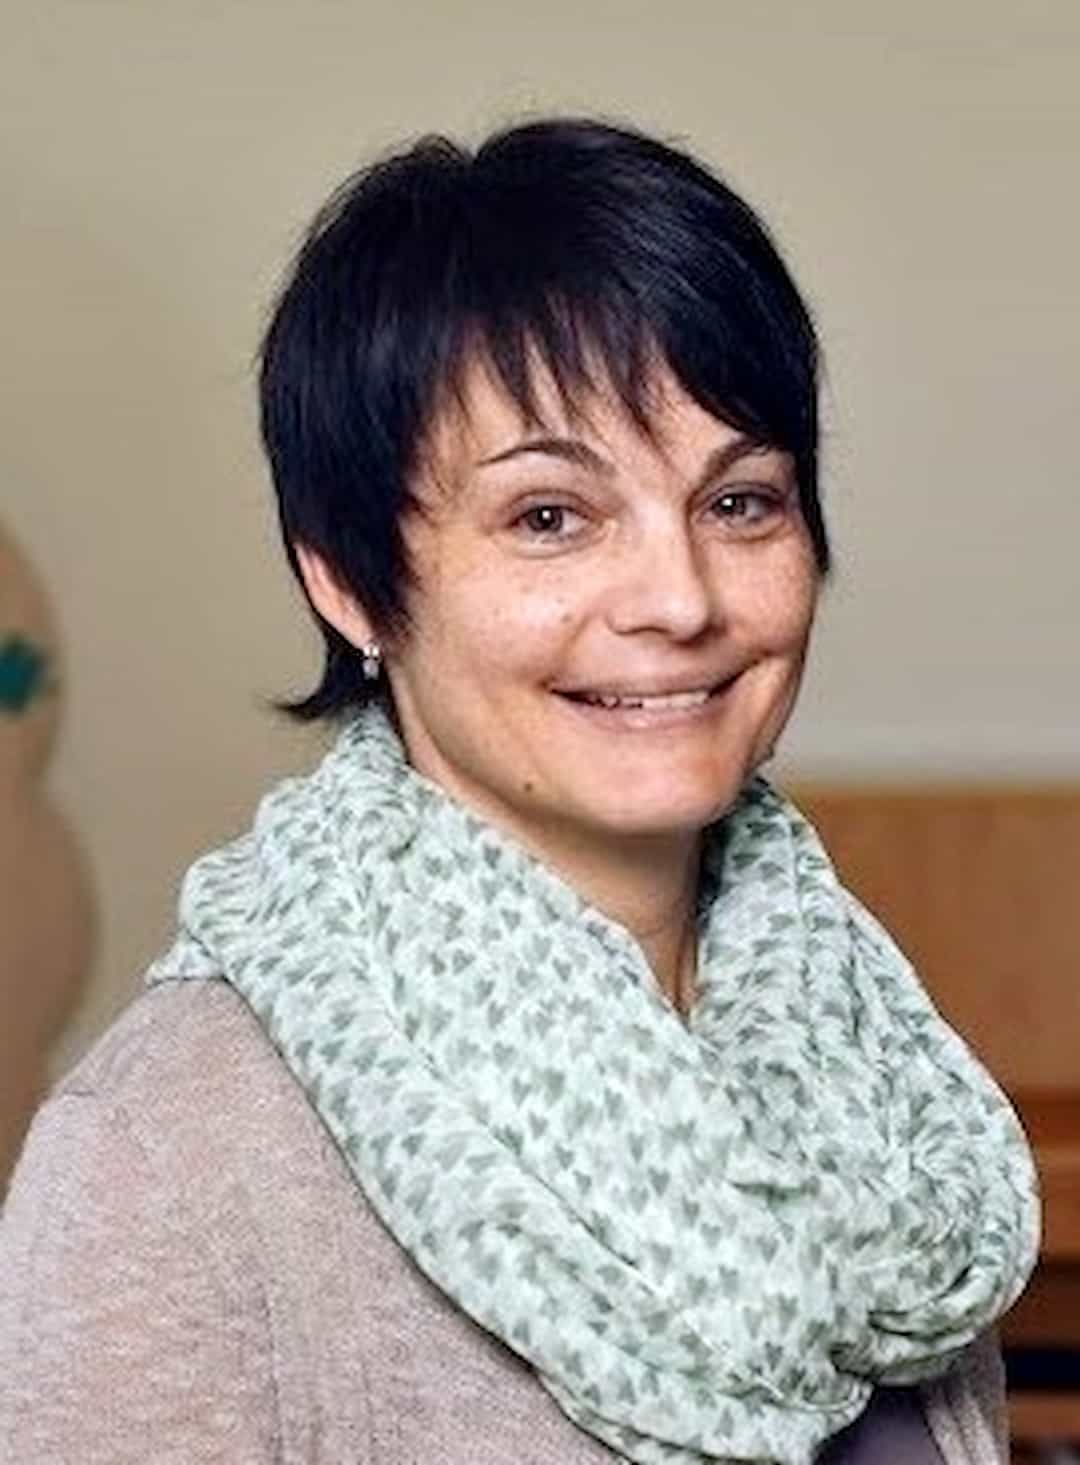 Bettina Nadig